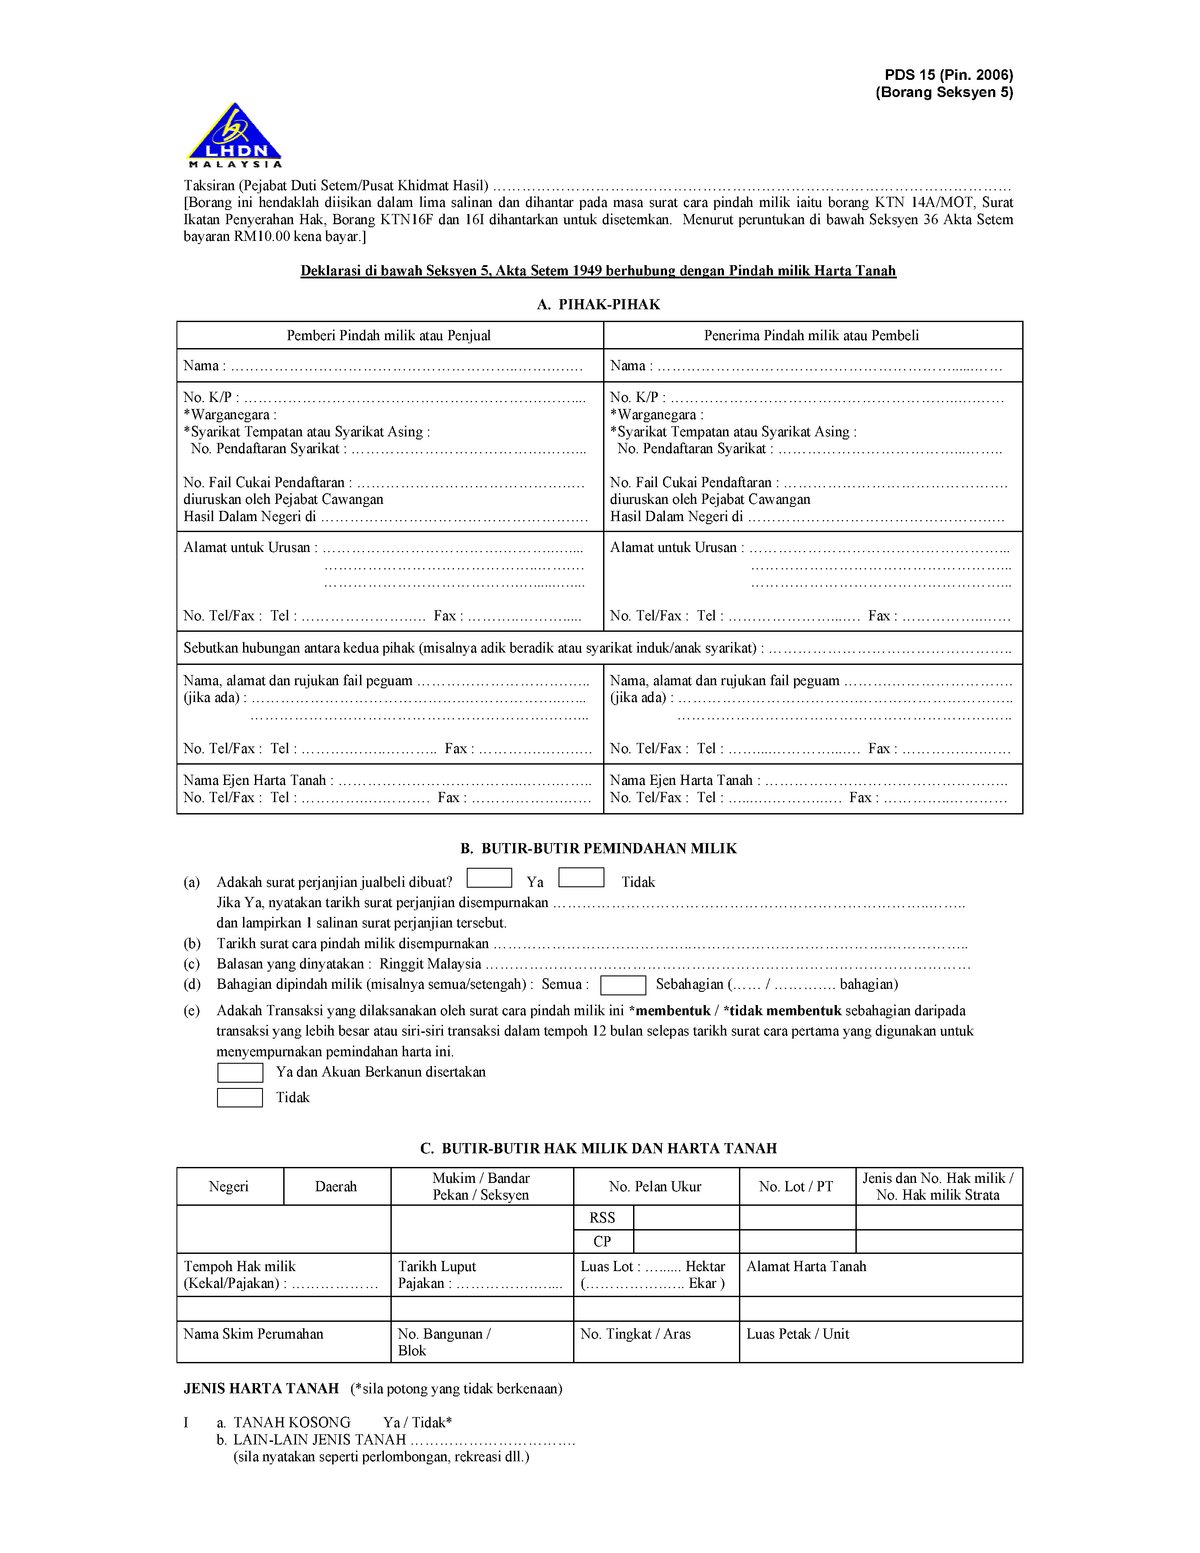 Form Pds15 - Pds 15 (Pin. 2006) (Borang Seksyen 5) Taksiran (Pejabat Duti Setem/Pusat Khidmat Hasil) - Studocu